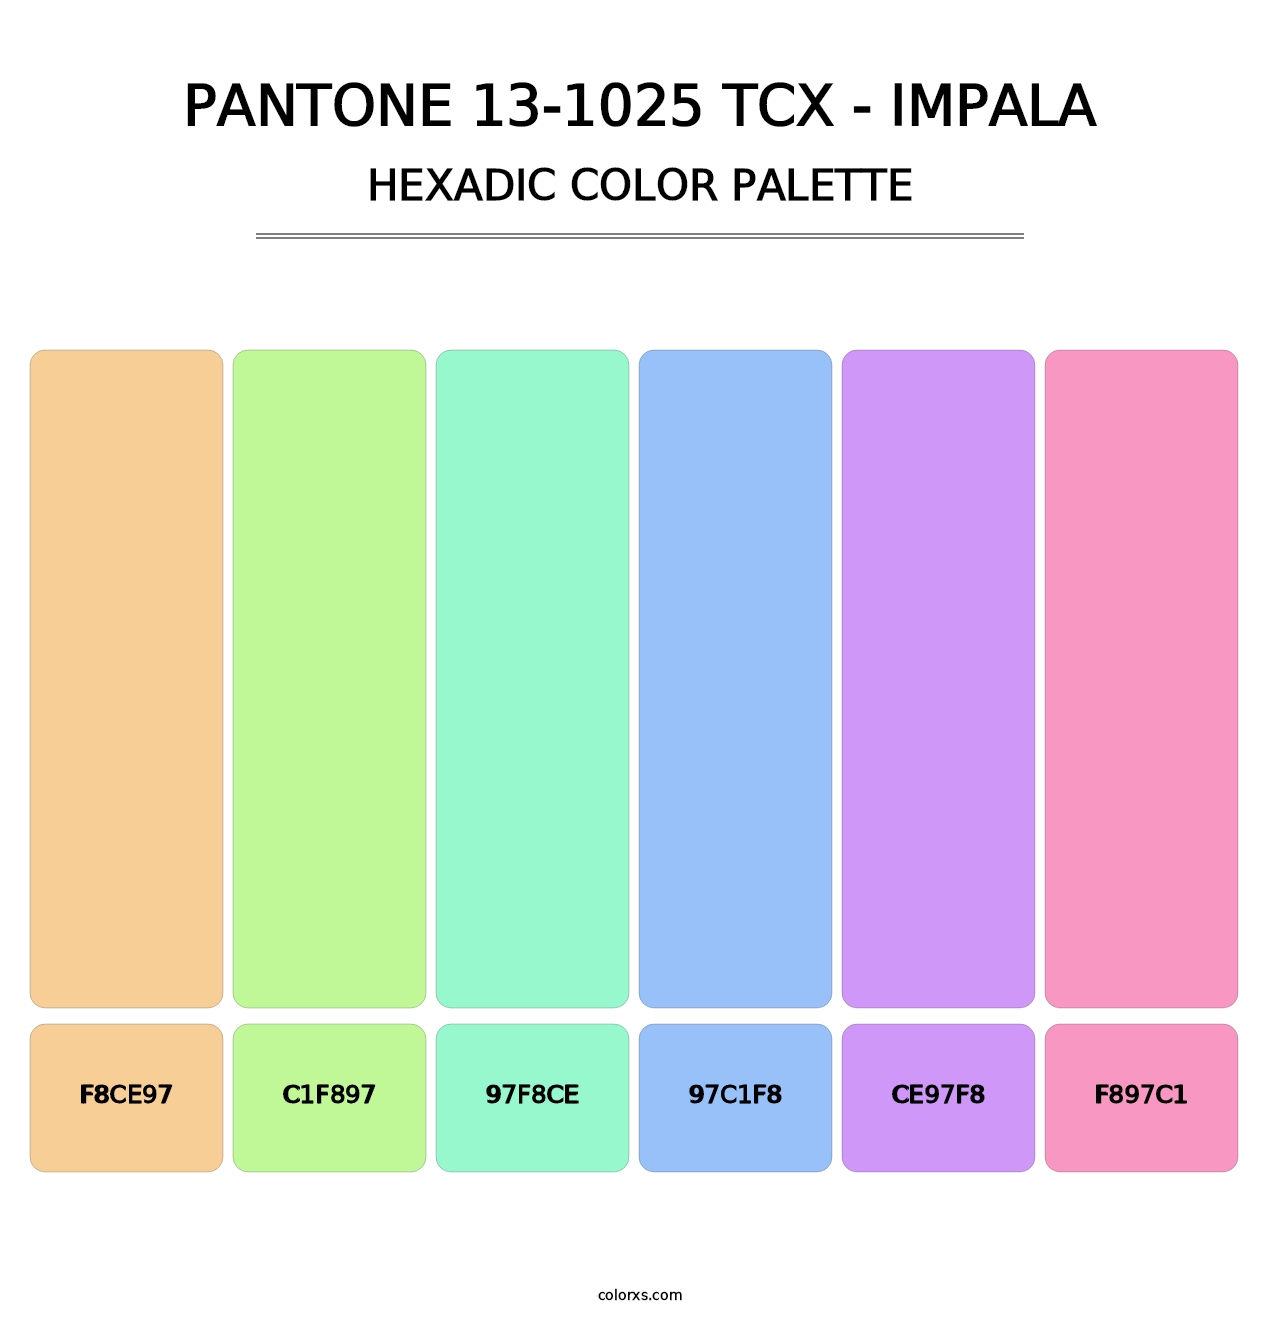 PANTONE 13-1025 TCX - Impala - Hexadic Color Palette